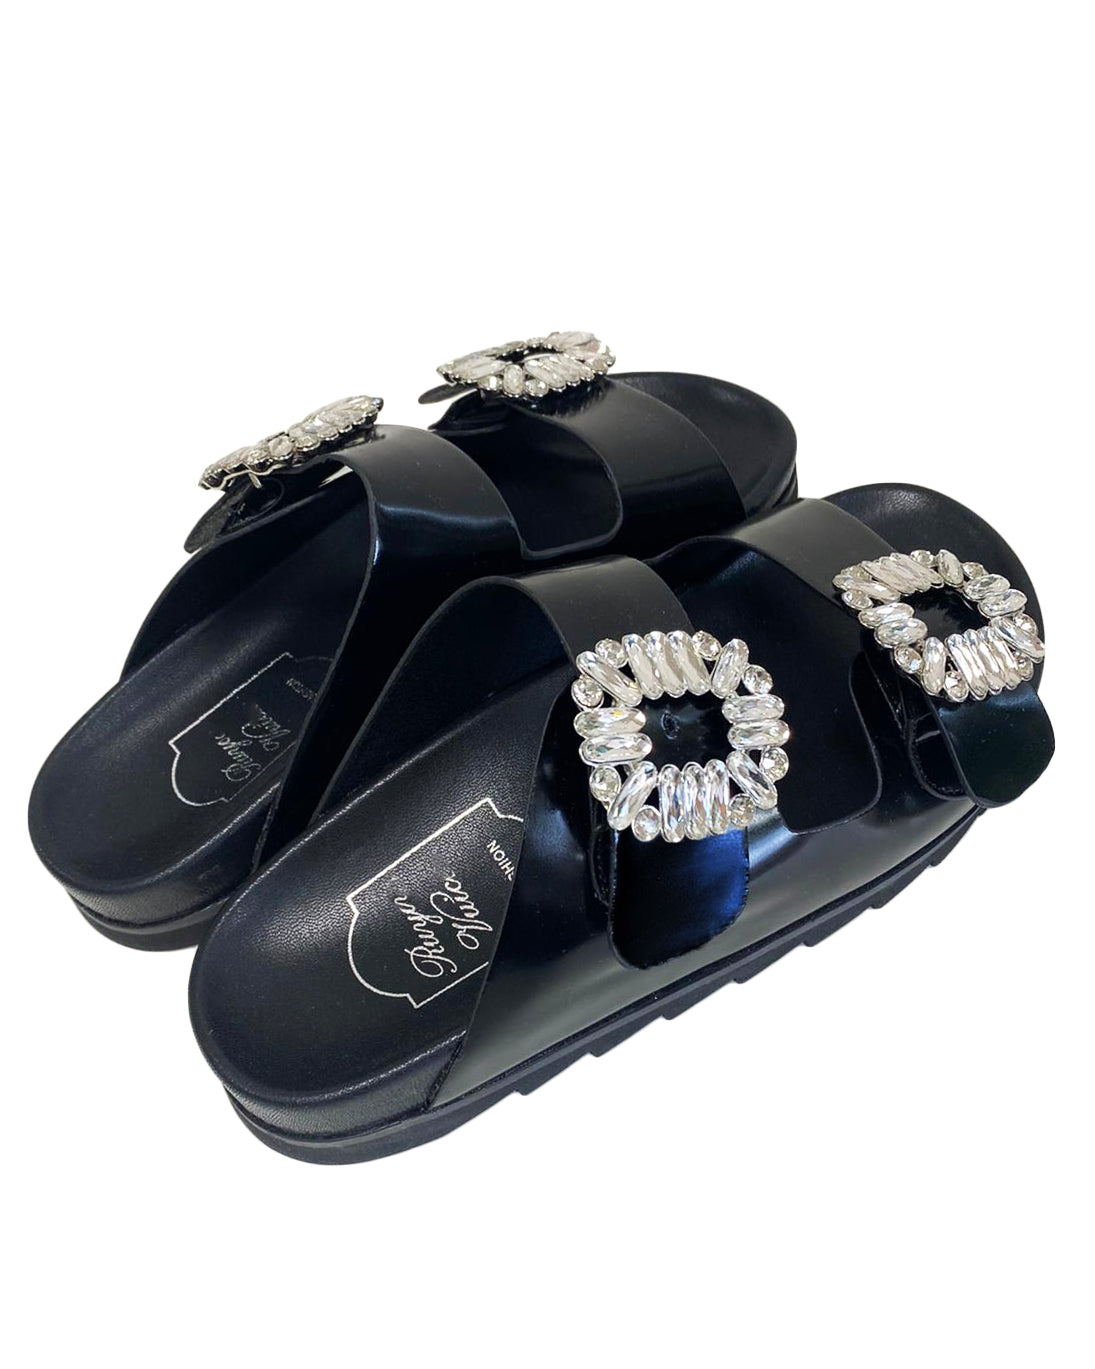 black PU leather double diamond buckles sandals *pre-order*